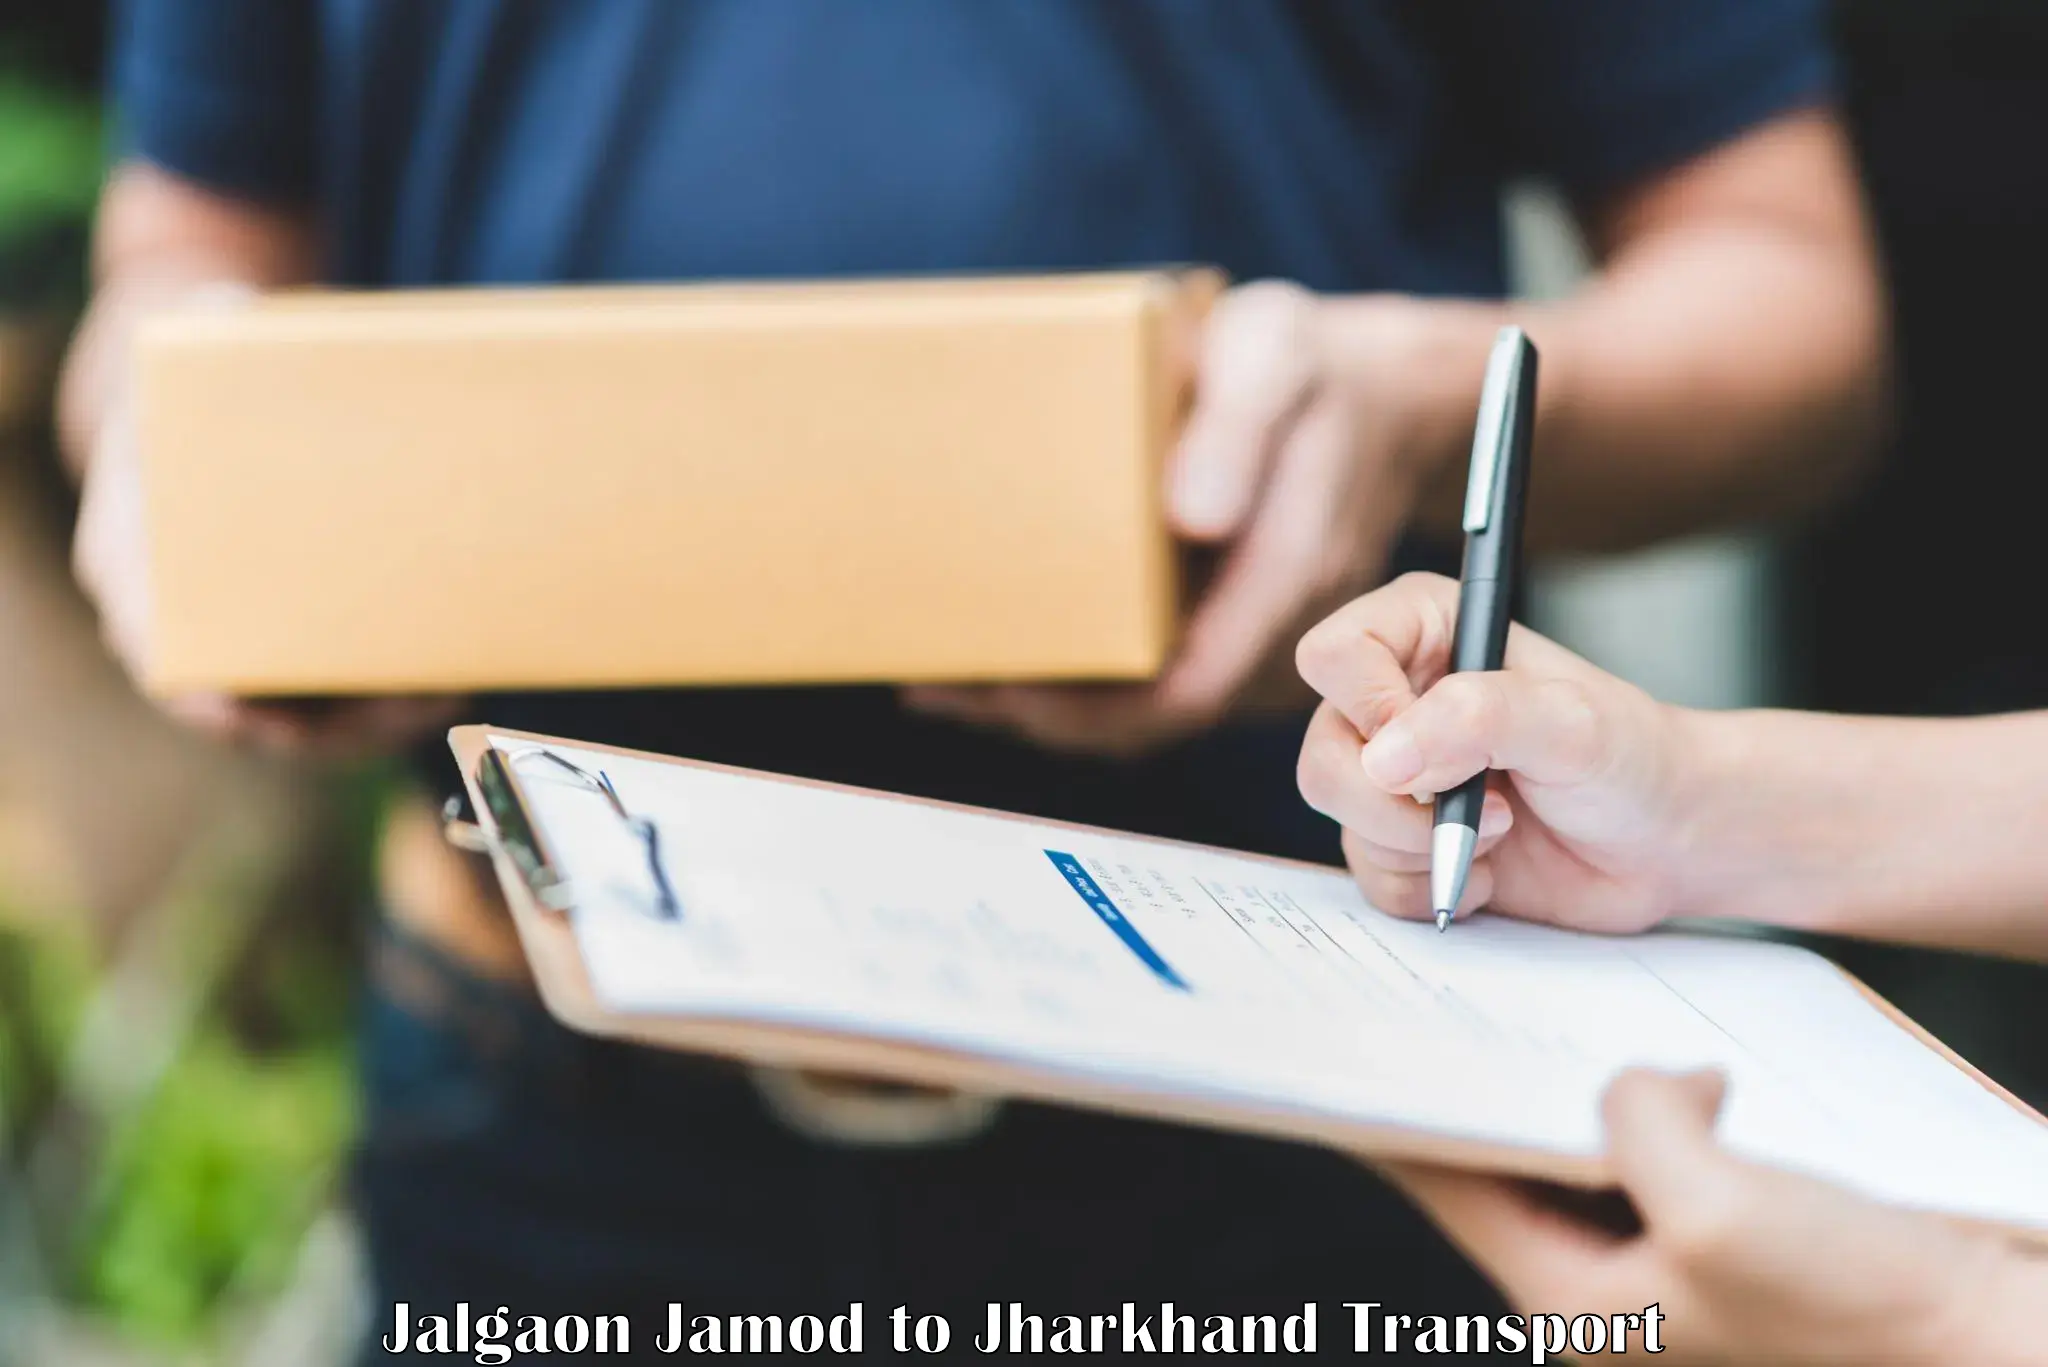 Online transport service Jalgaon Jamod to Lohardaga